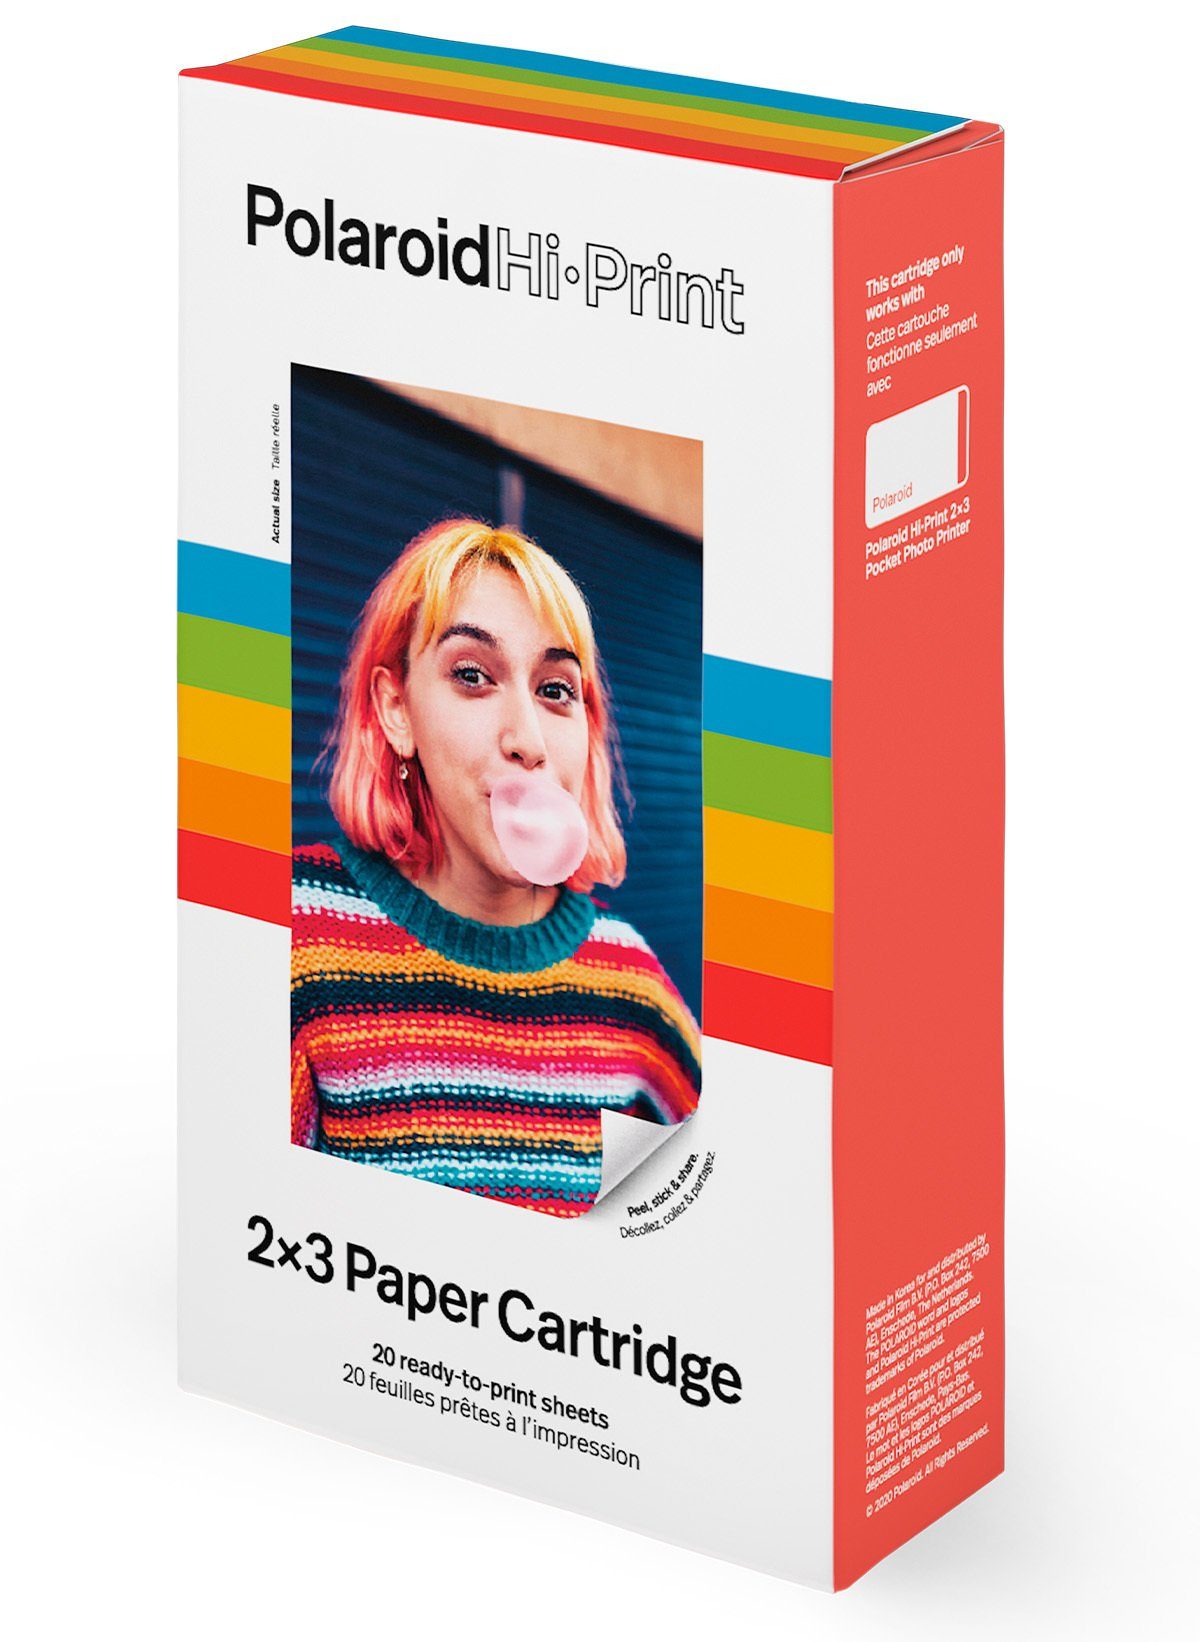 Cartridge Sofortbildkamera Originals 2x3 Print Polaroid Hi Polaroid Paper